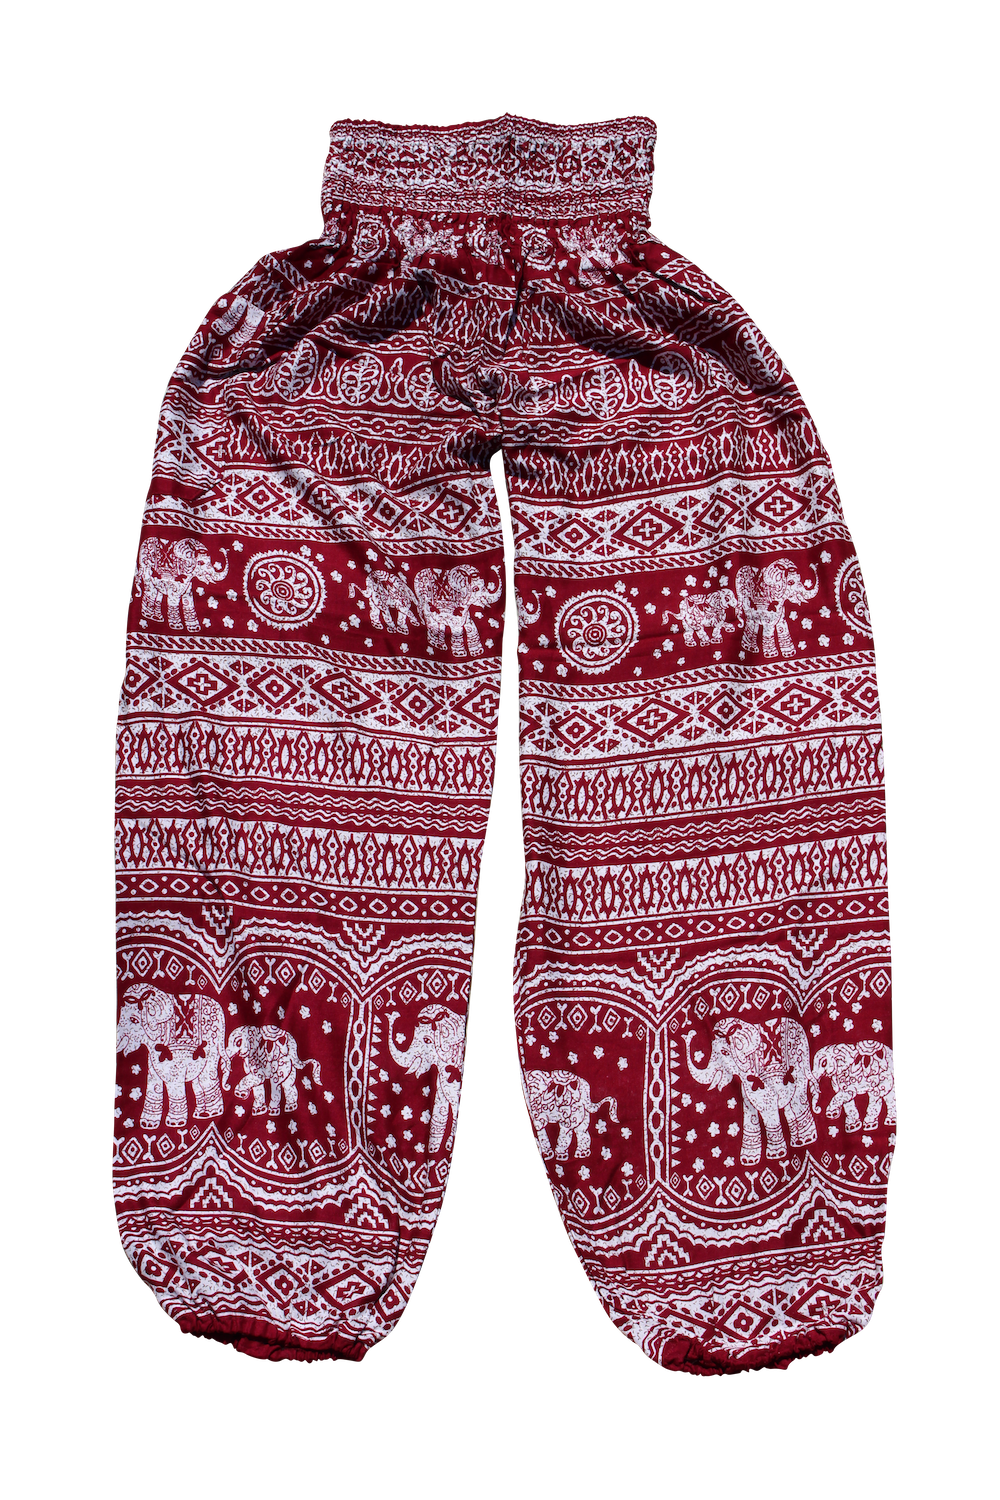 Elephant Yoga Pants - Eco Friendly, Stephanie Rose